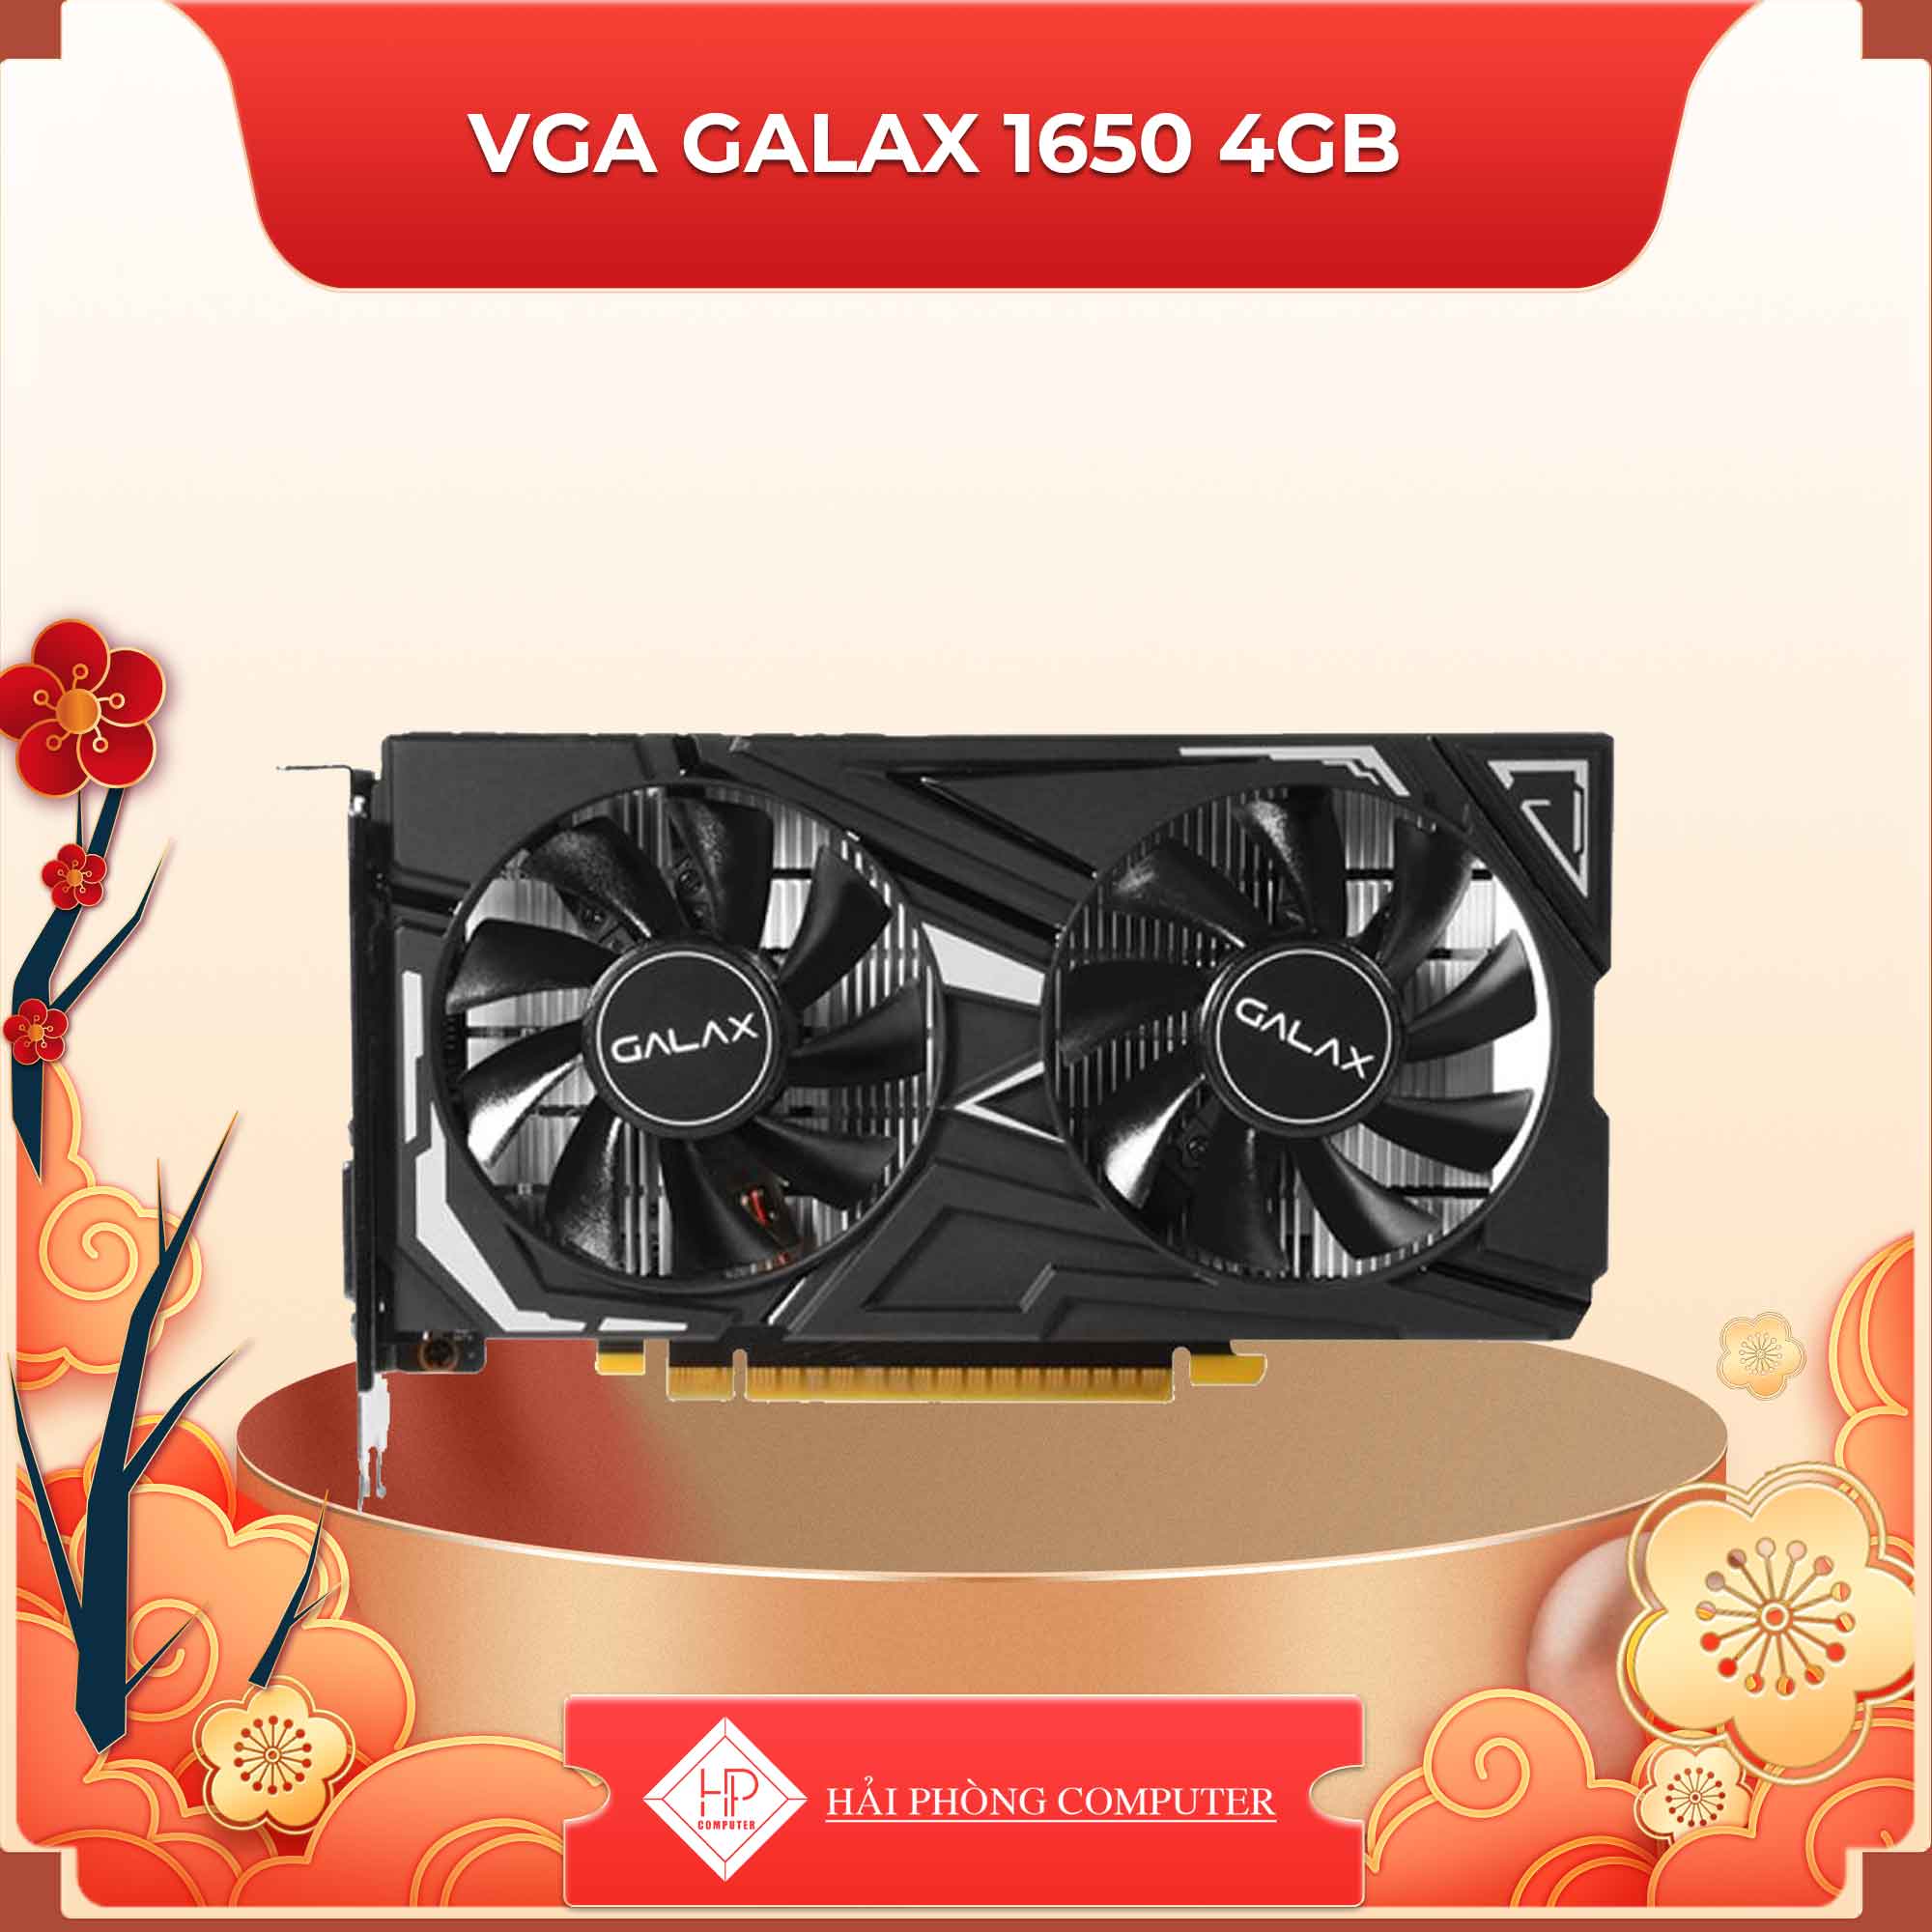 VGA Galax 1650 4GB